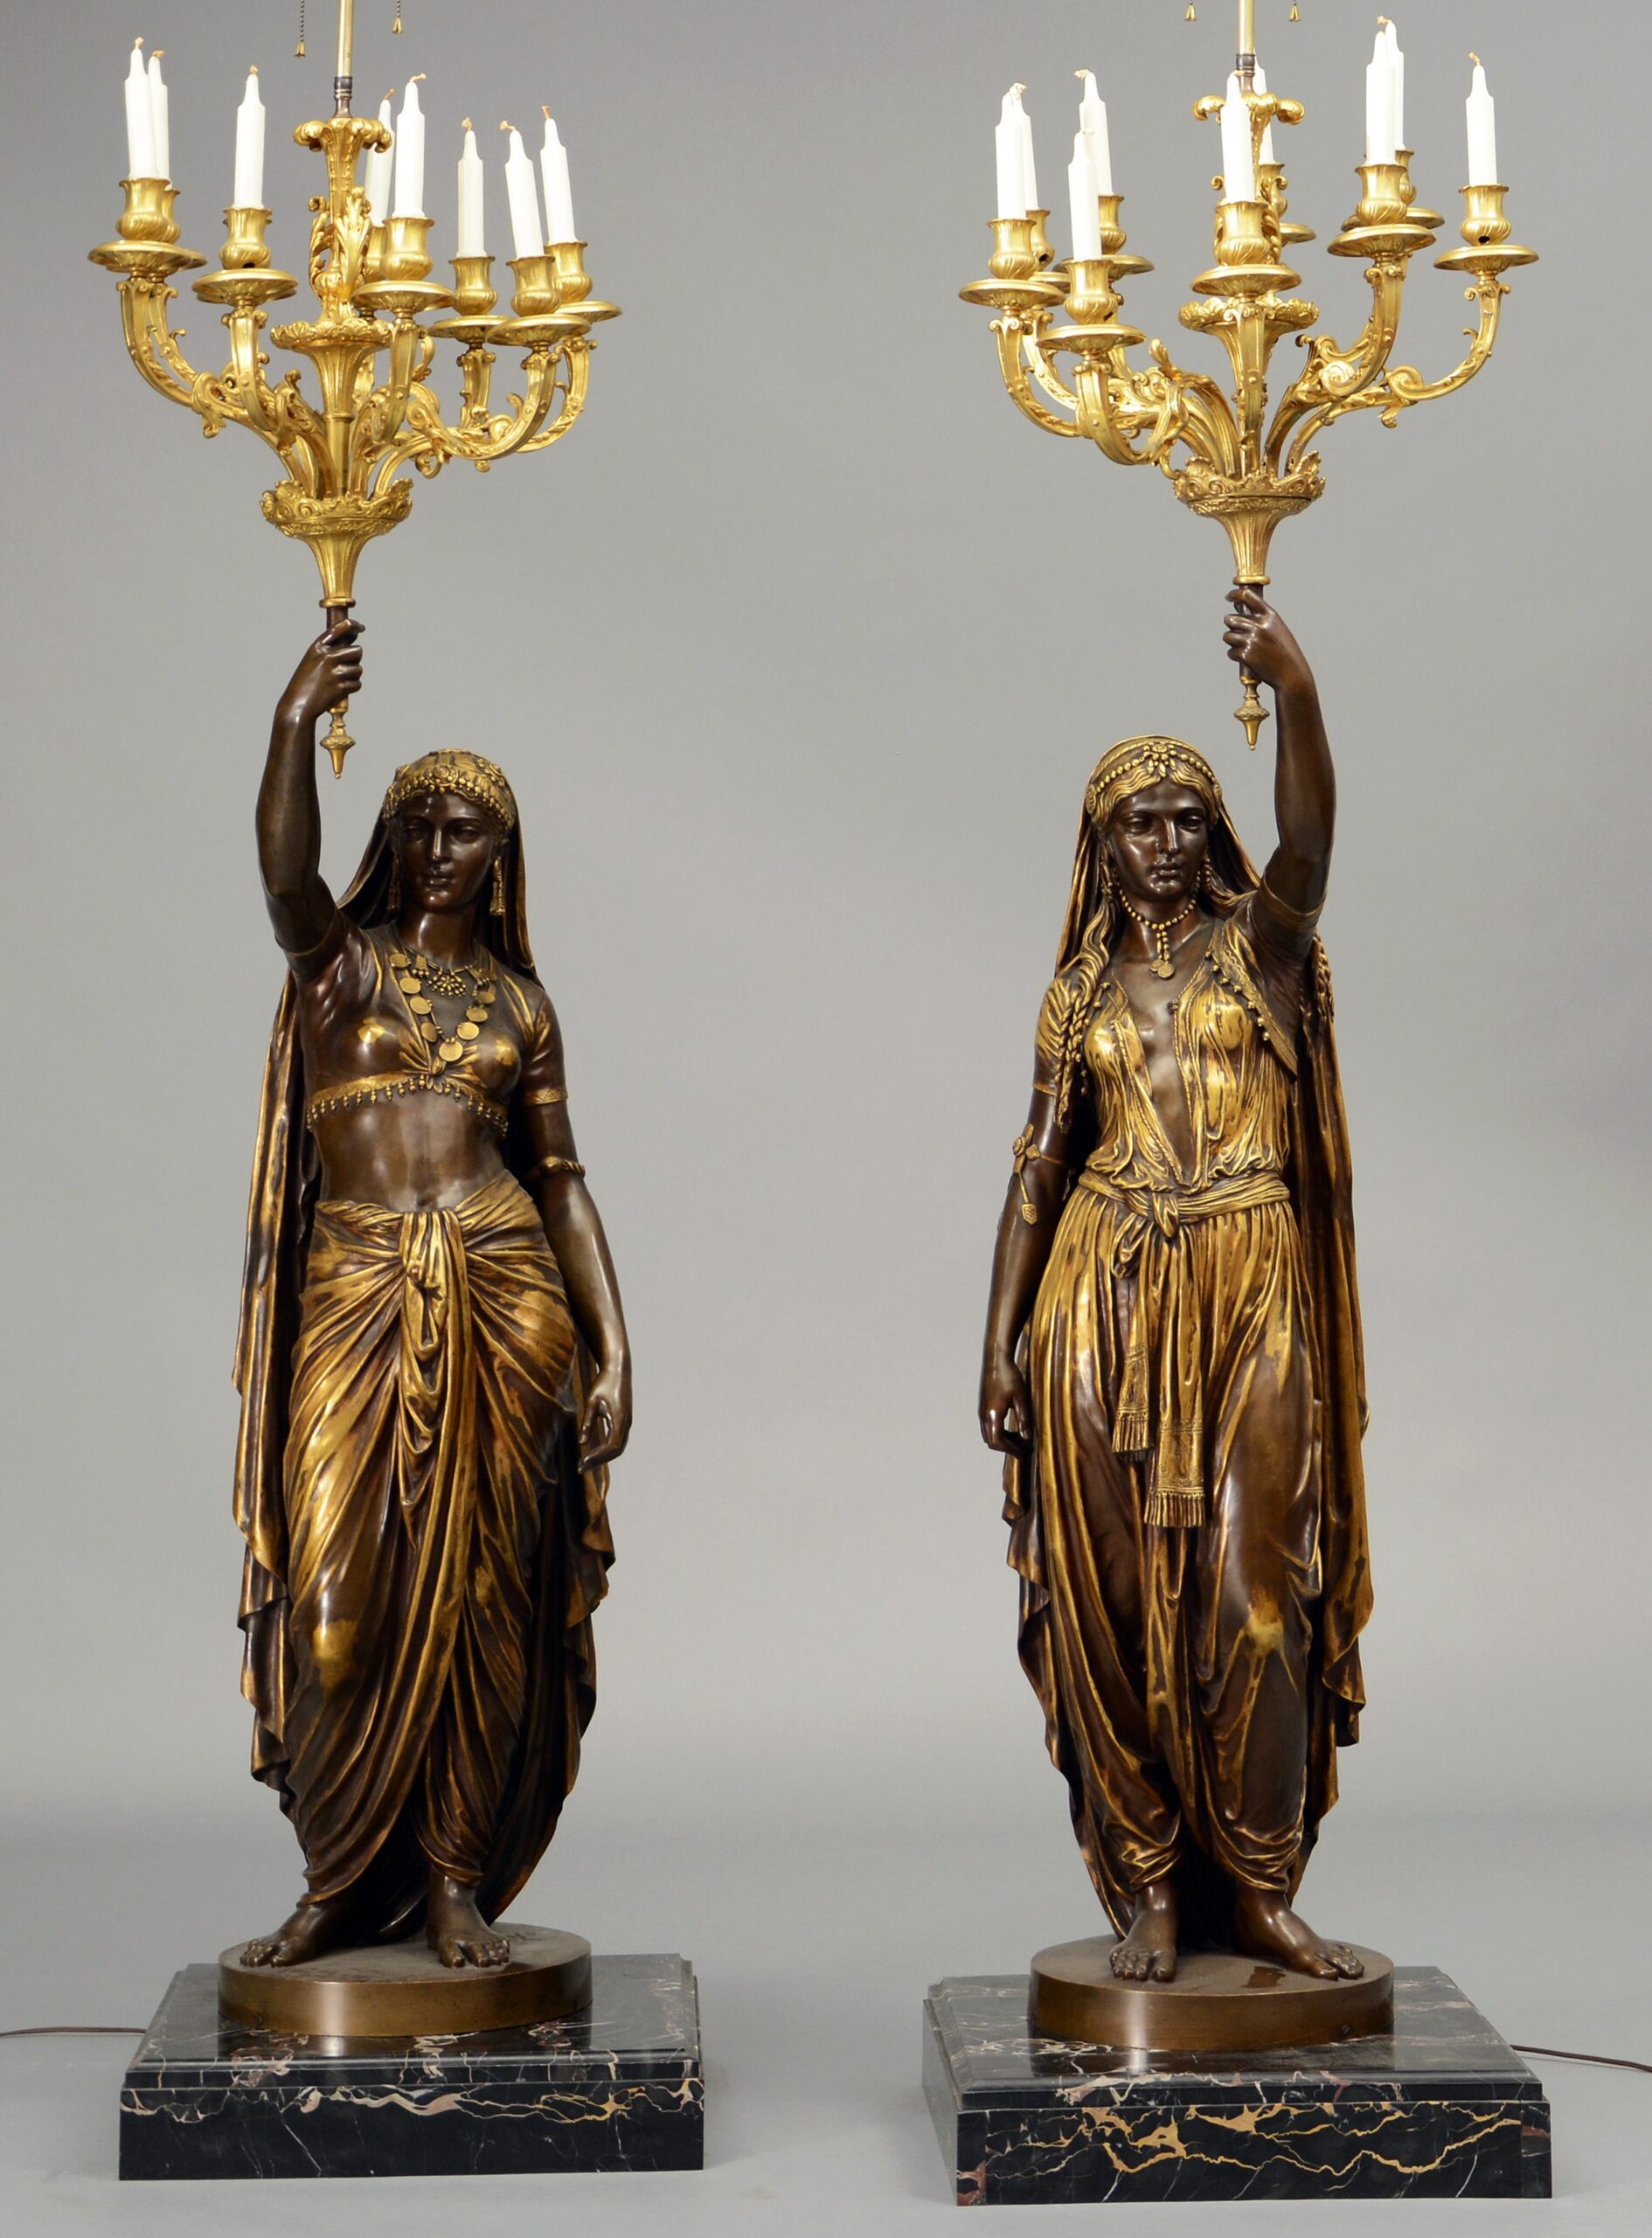 Monumental French bronze candelabras $95,000